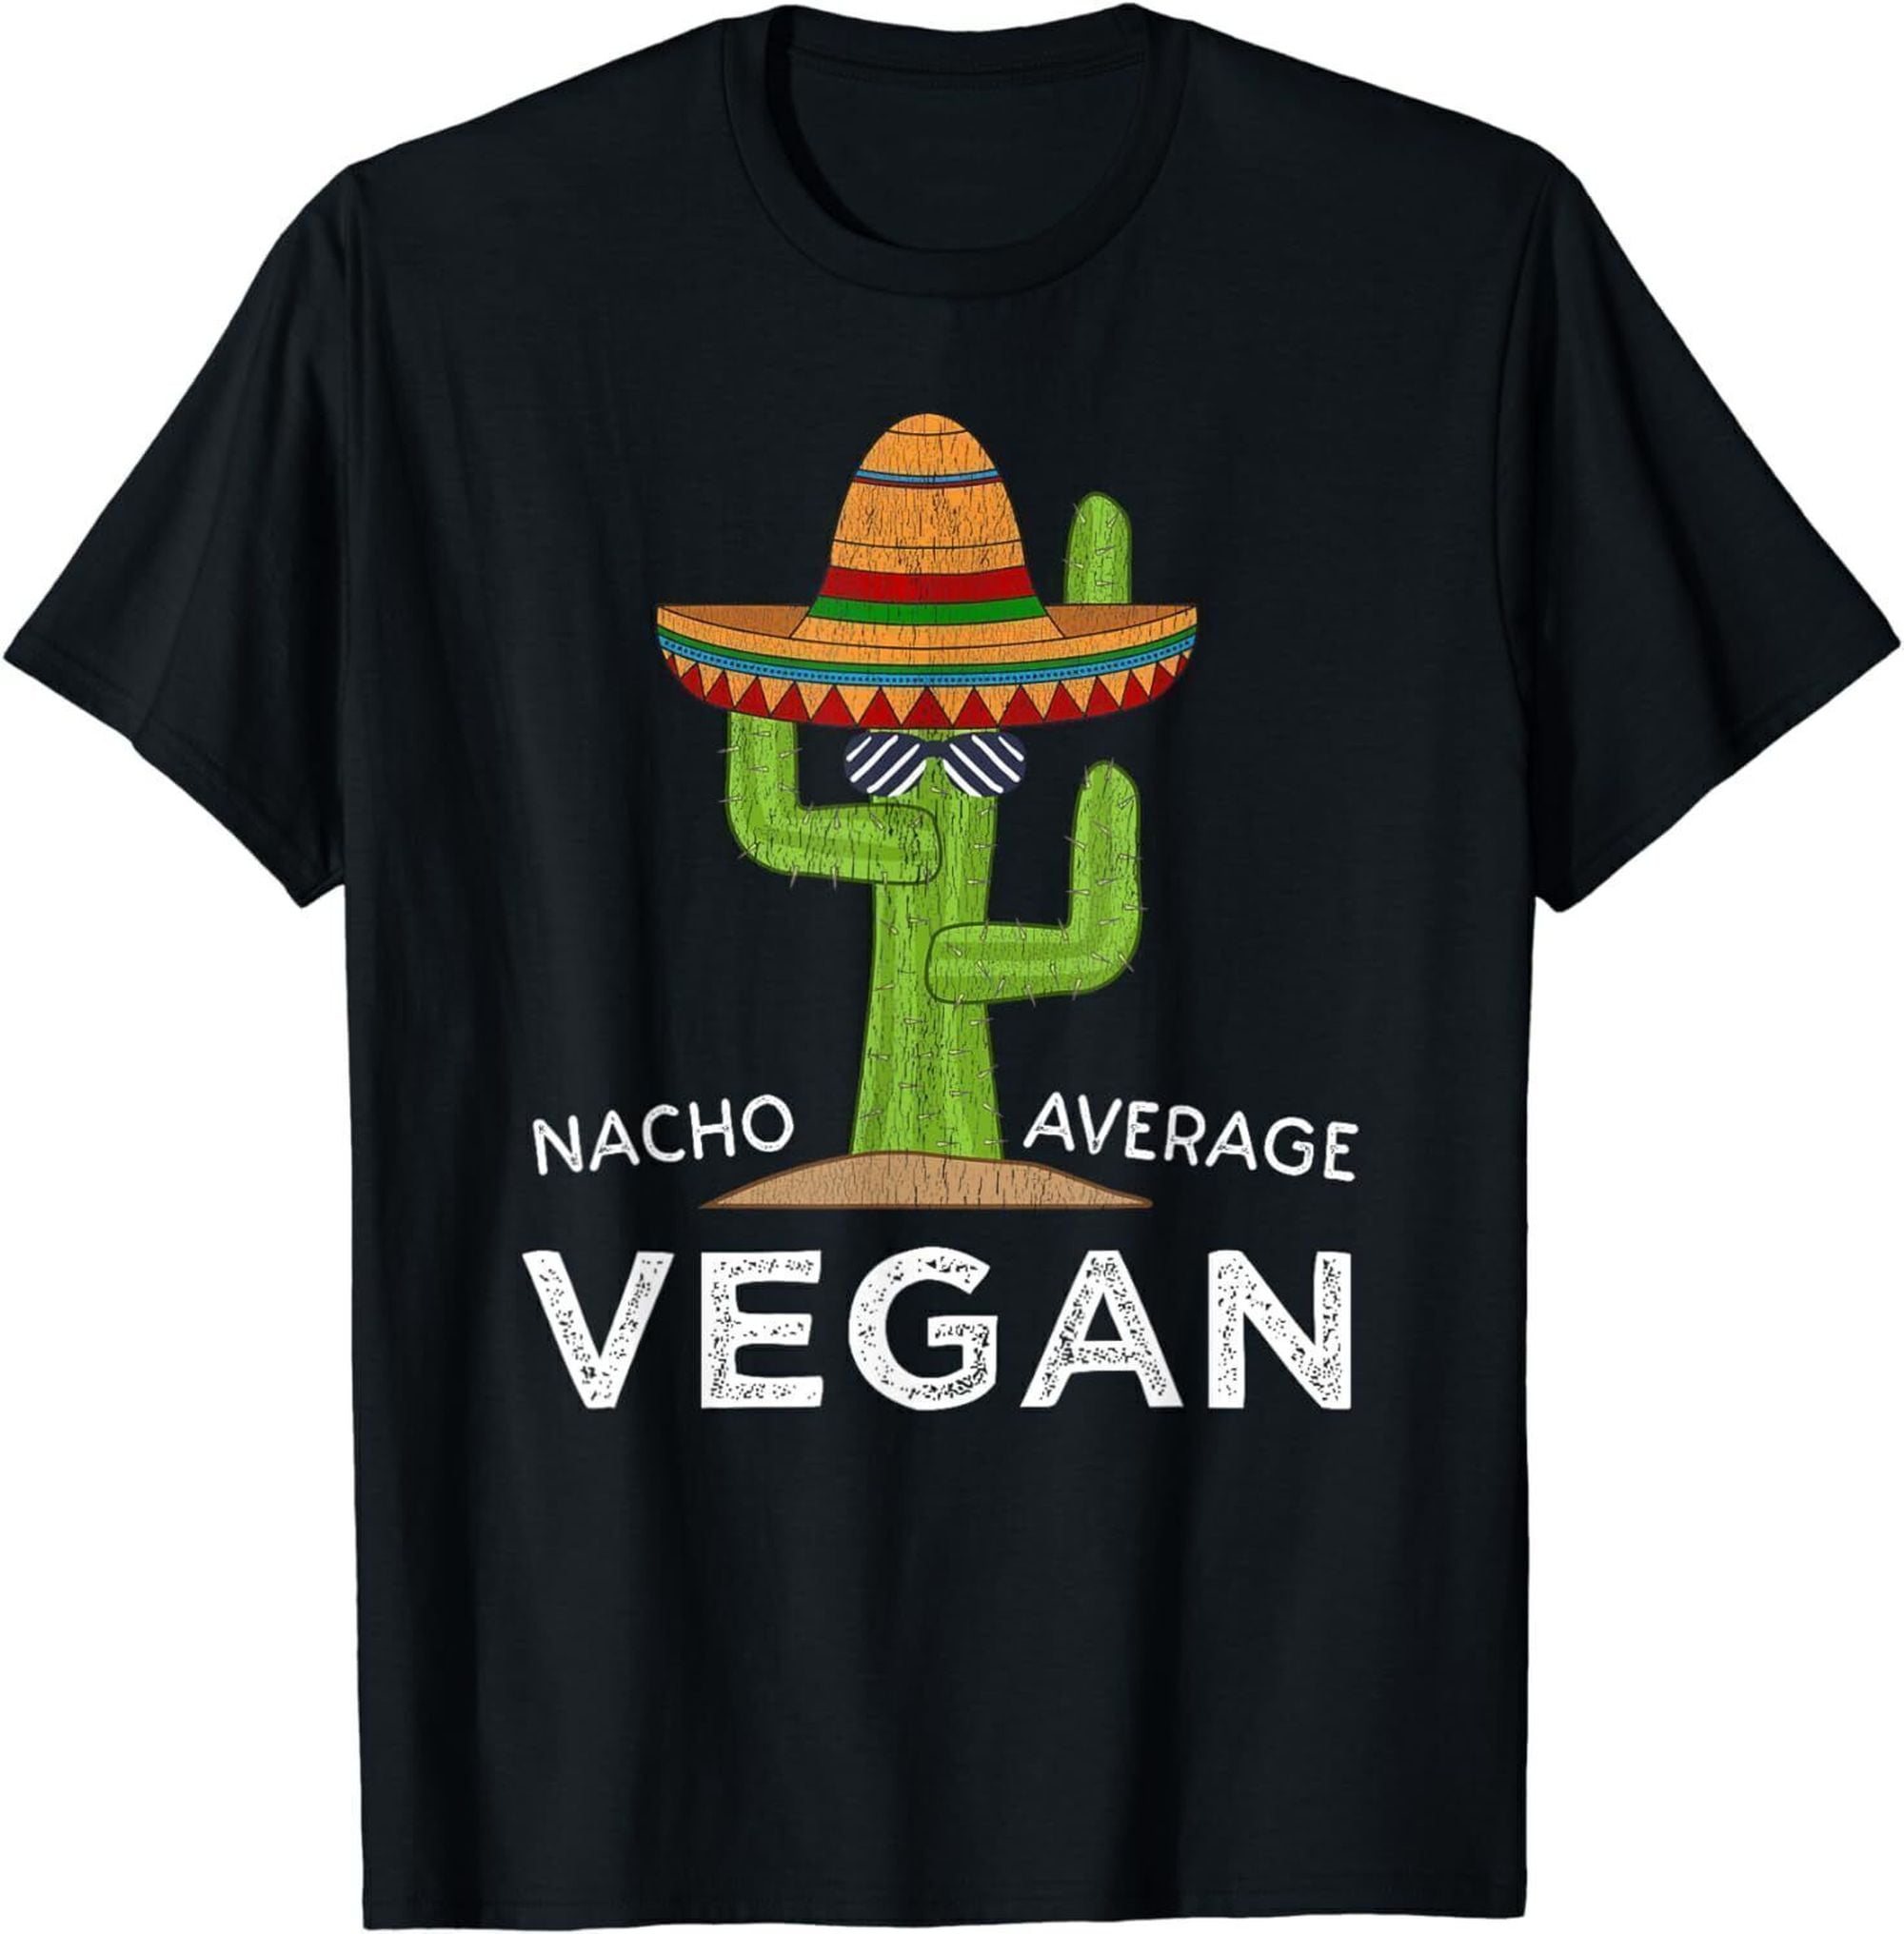 Vegan Humor: Hilarious Plant-Based T-Shirt for a Good Laugh - Walmart.com